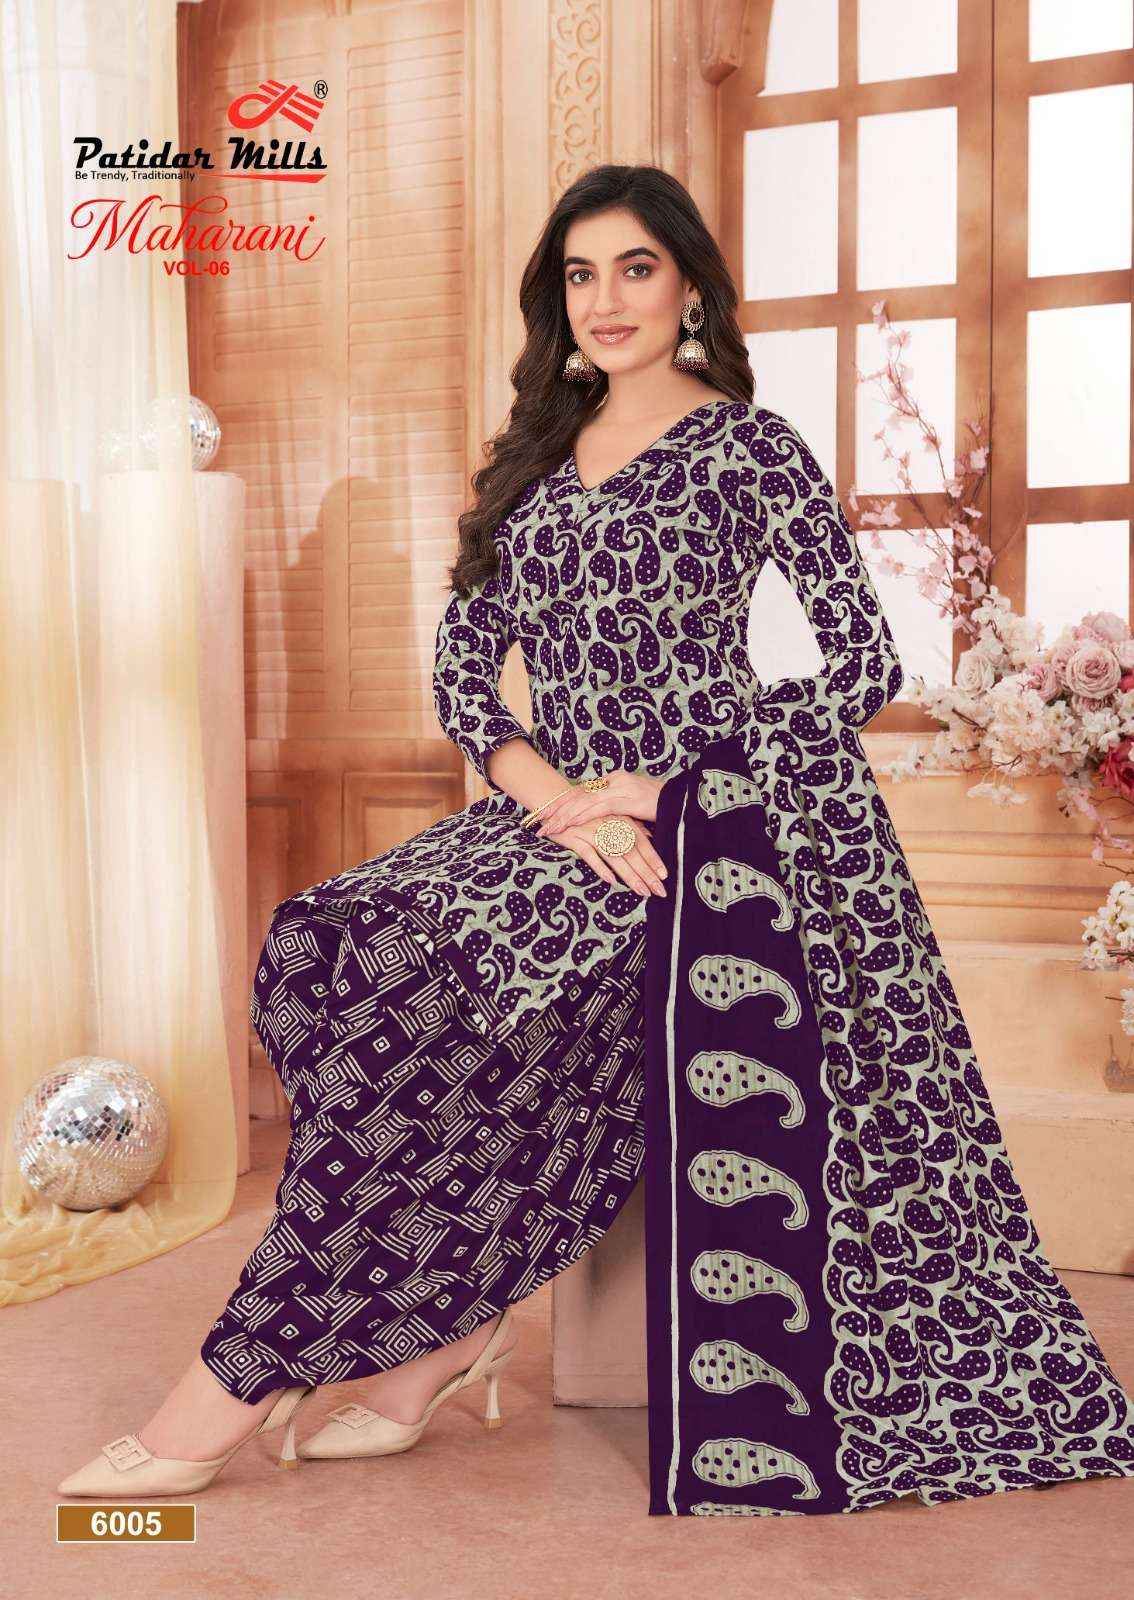 Patidar Mills Maharani Vol 6 Cotton Dress Material 10 pcs Catalogue